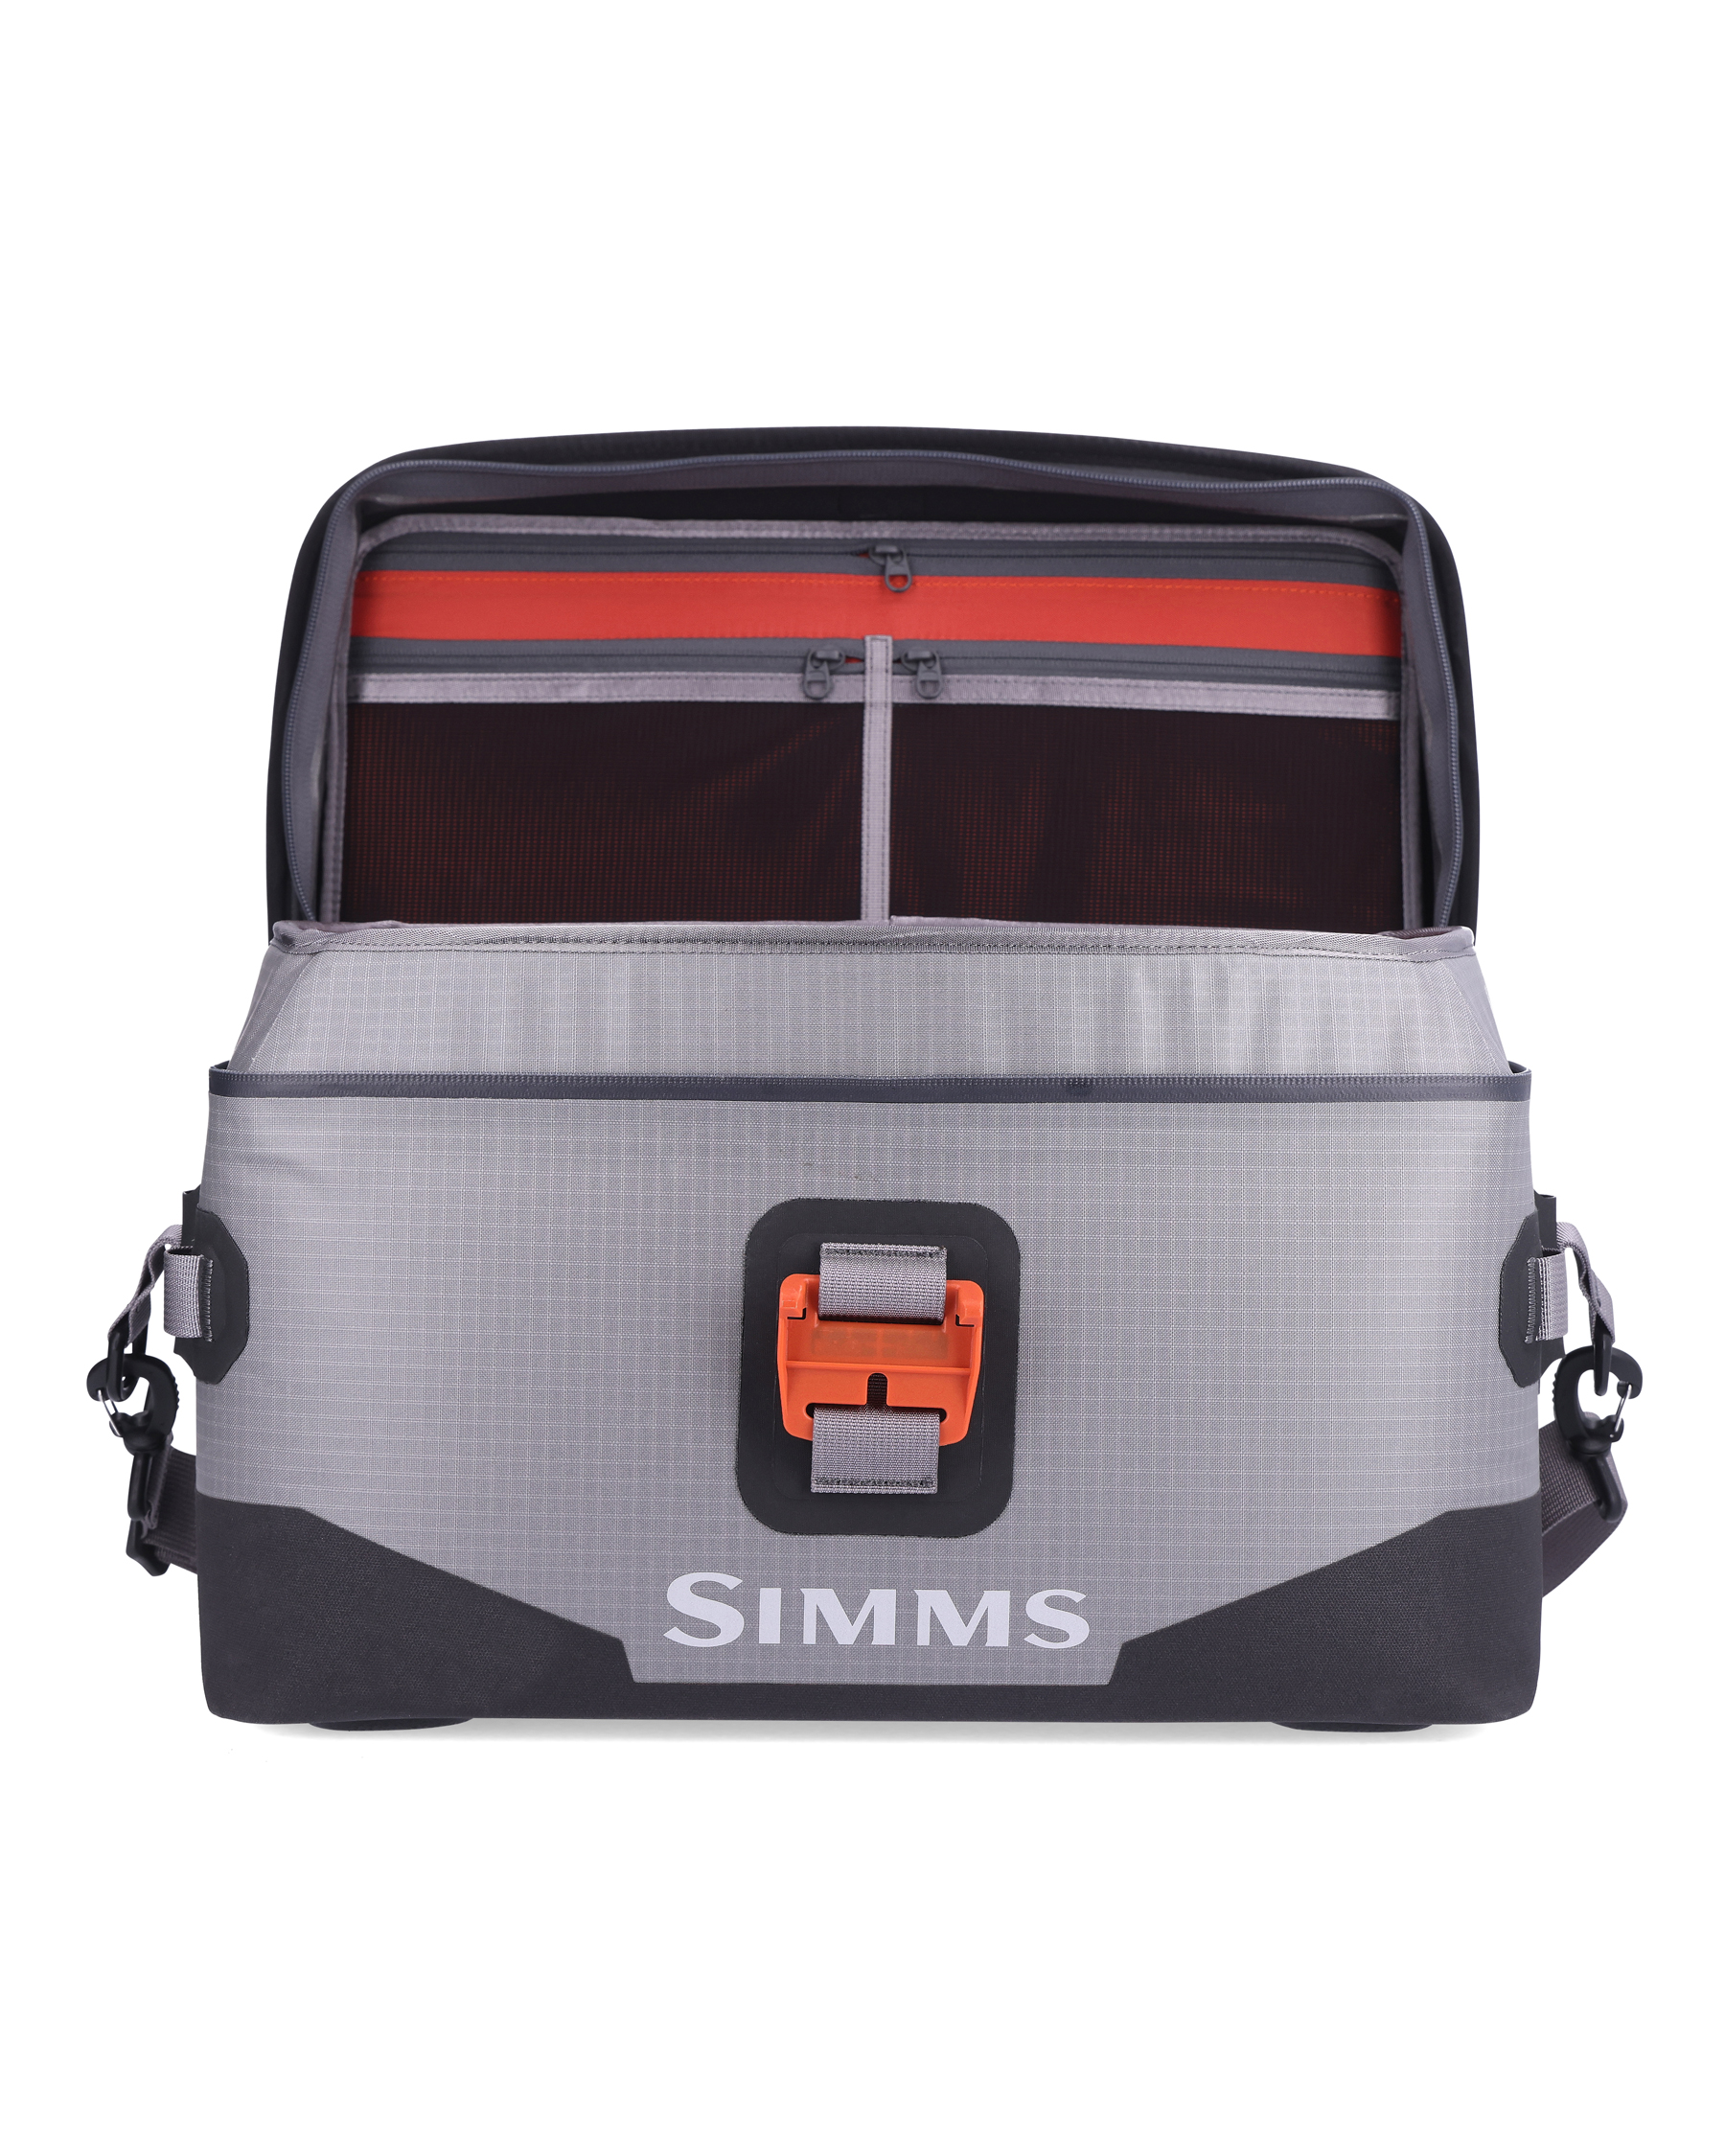 Dry Creek® Boat Bag - Small | Simms | マーヴェリック / Maverick